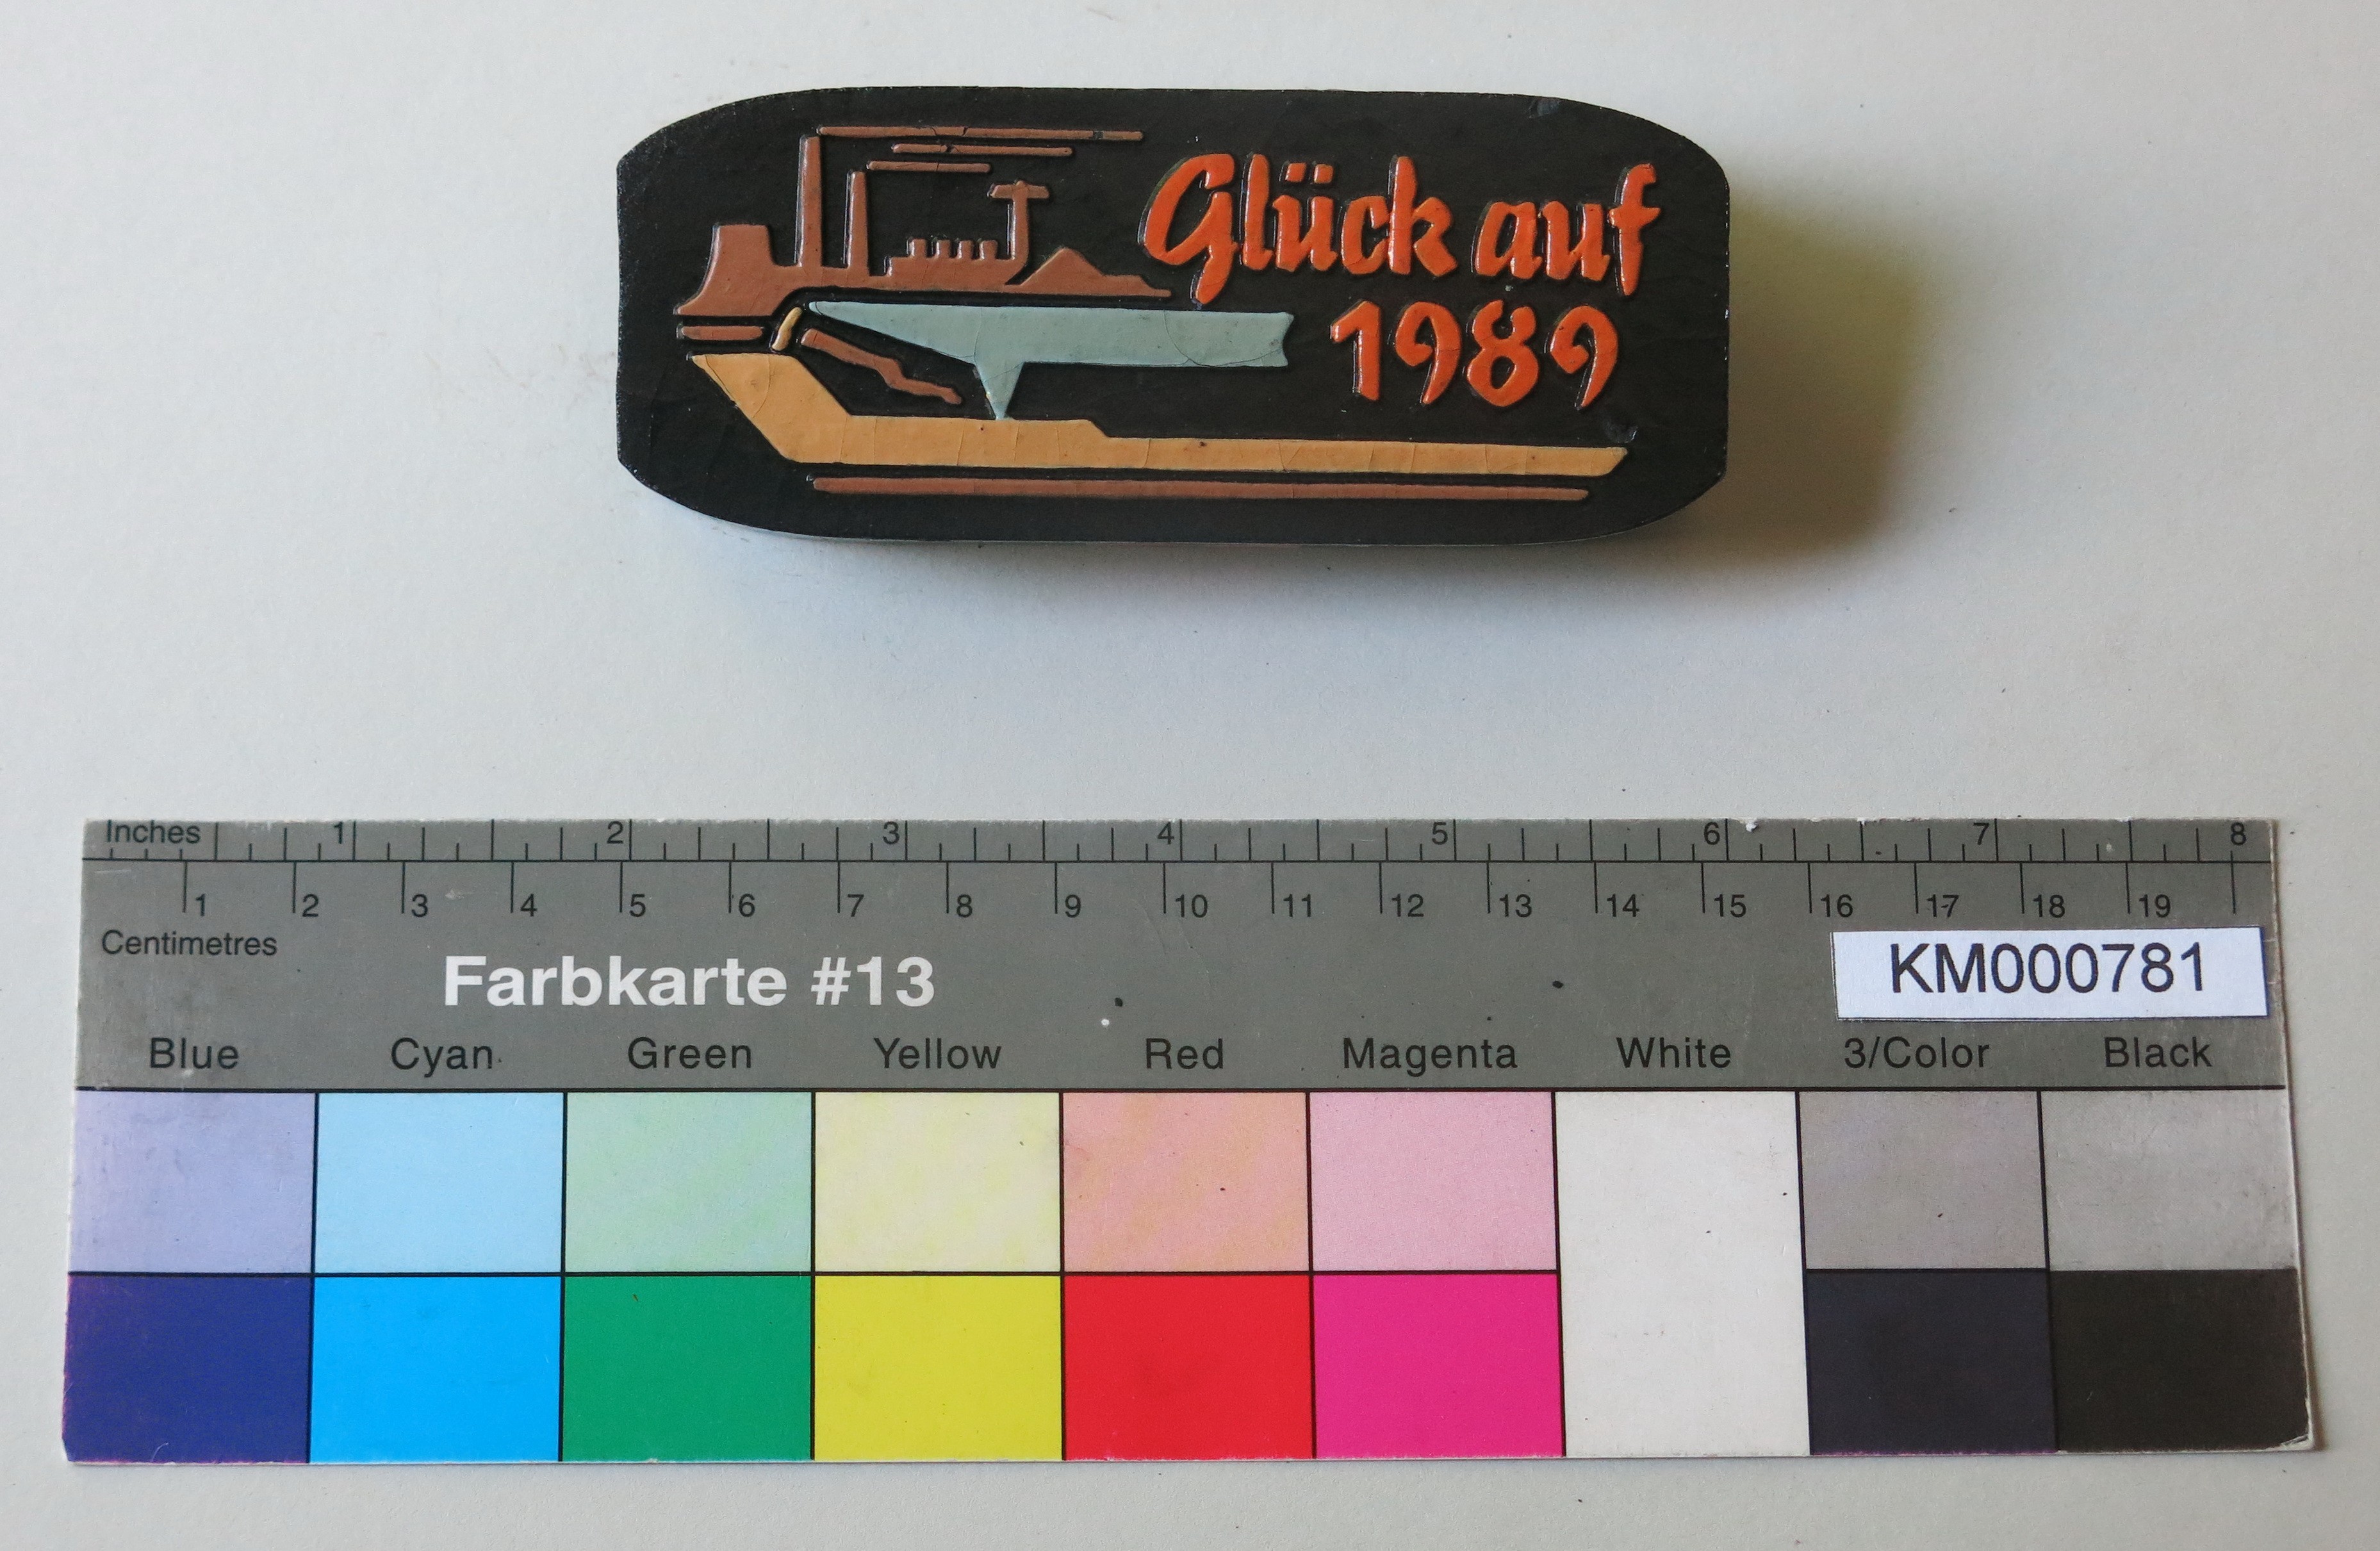 Zierbrikett "Glück auf 1989" (Energiefabrik Knappenrode CC BY-SA)